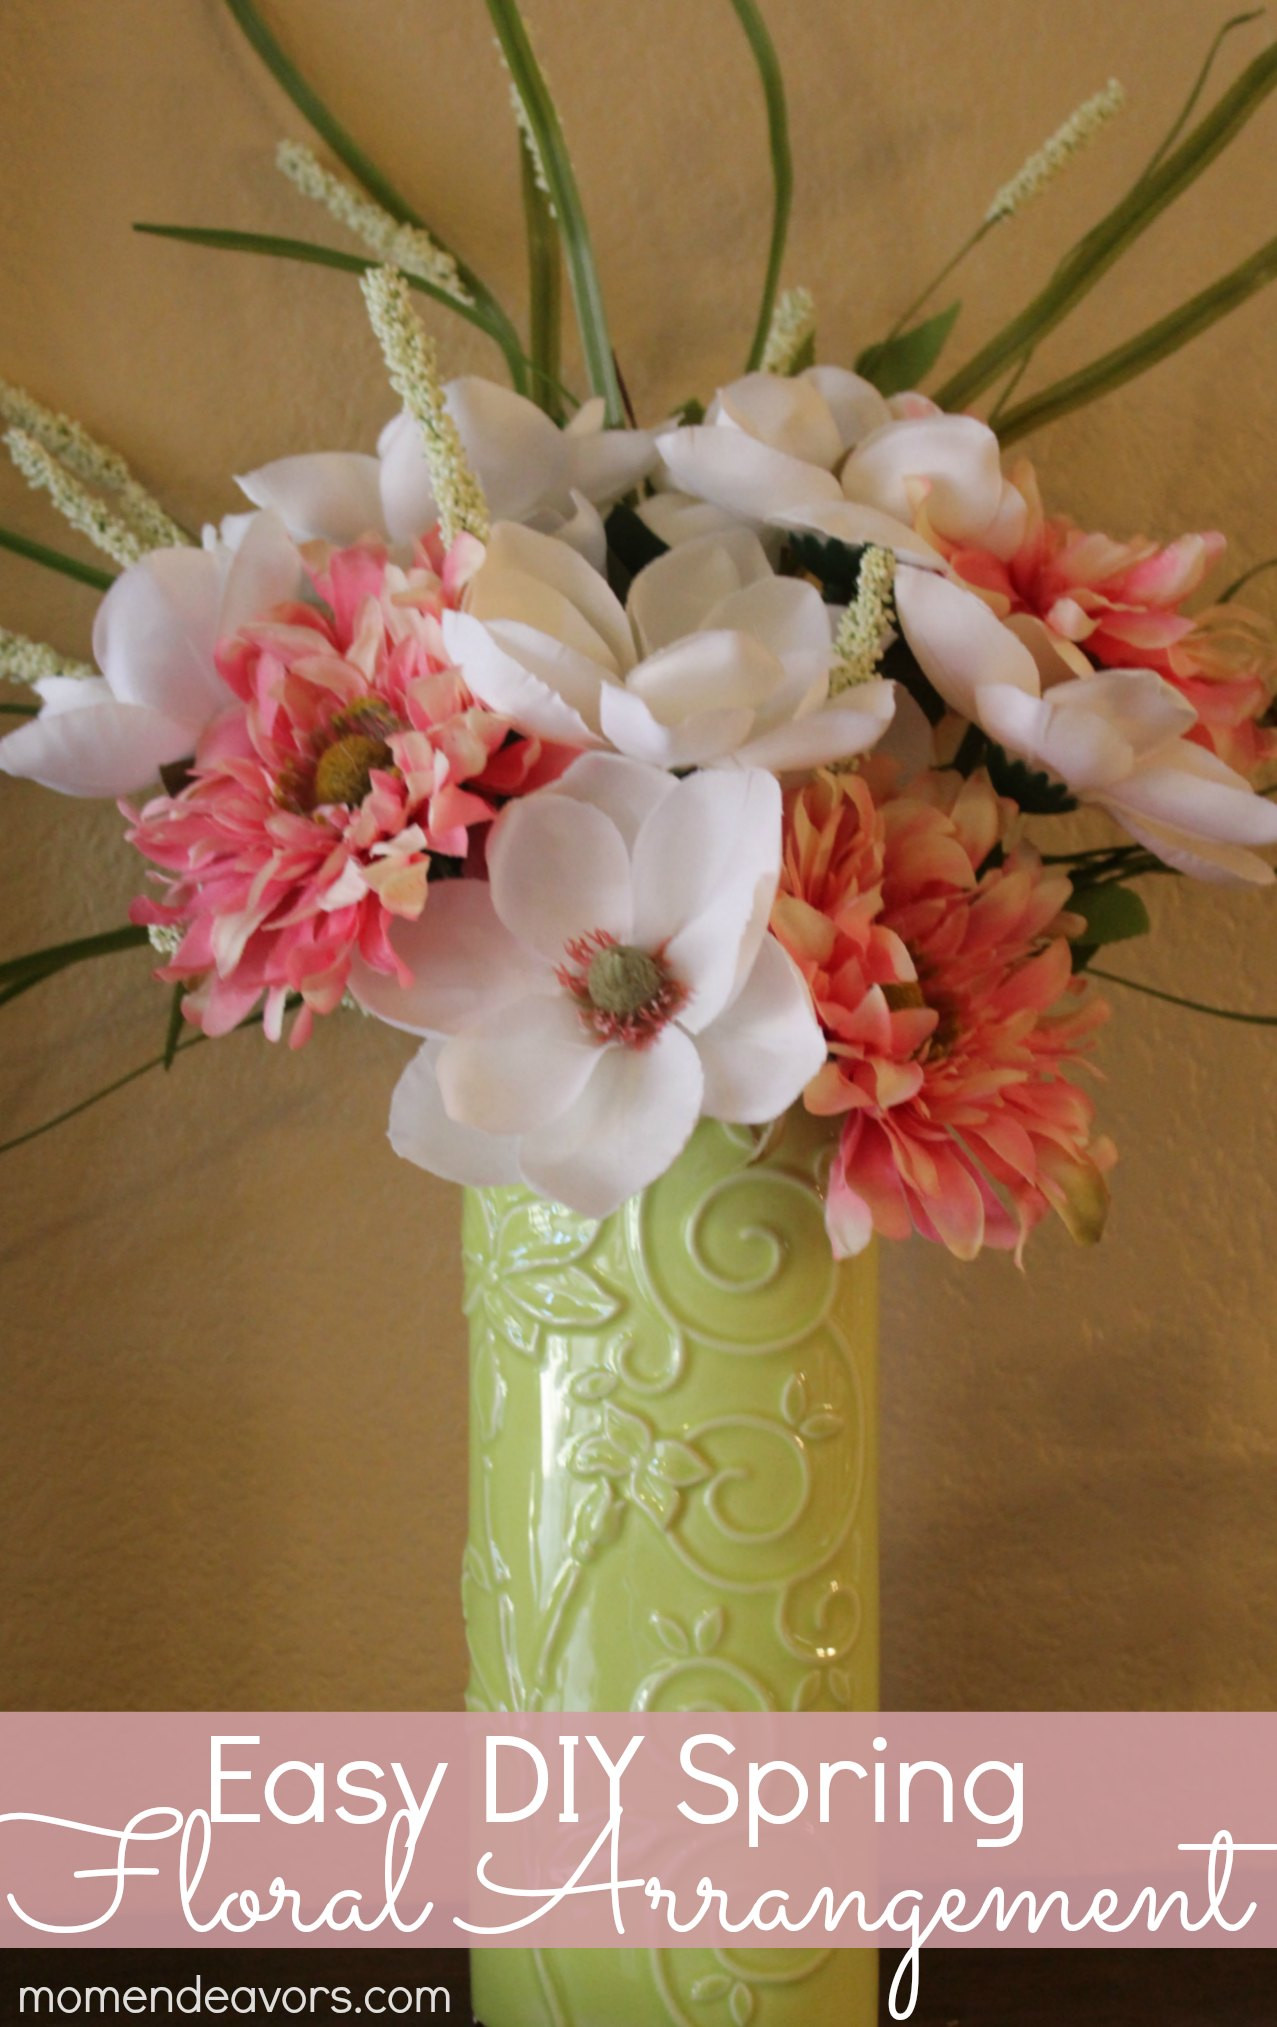 Best ideas about Flower Arrangements DIY
. Save or Pin Easy DIY Spring Flower Arrangement Now.